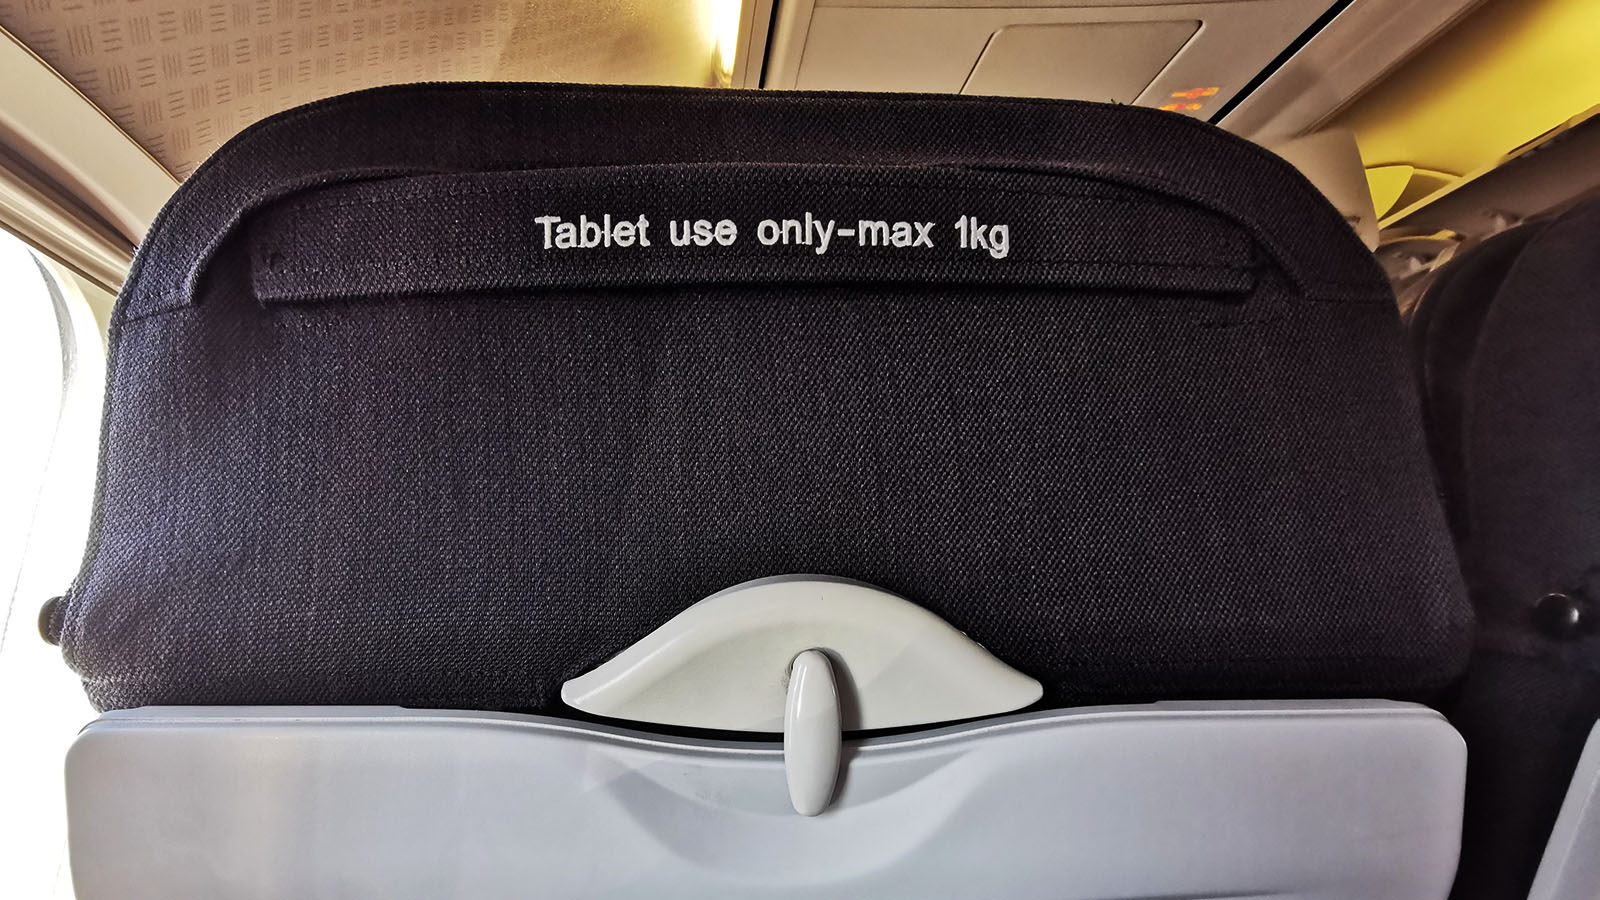 Qantas Boeing 737 Economy tablet holder